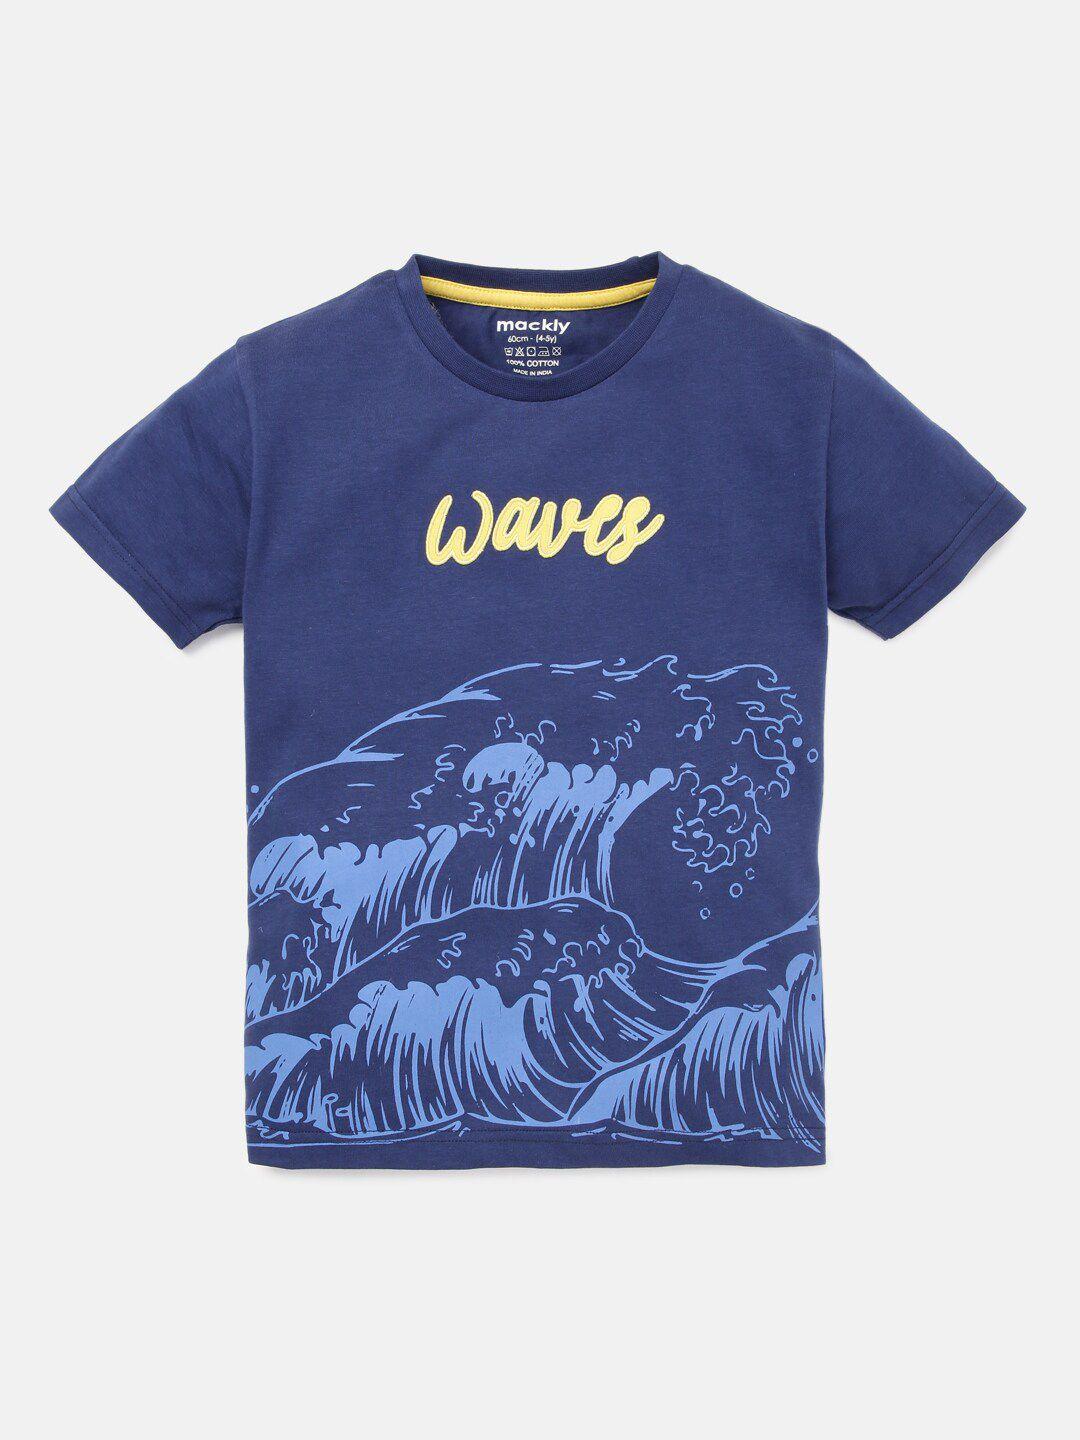 mackly boys navy blue printed t-shirt